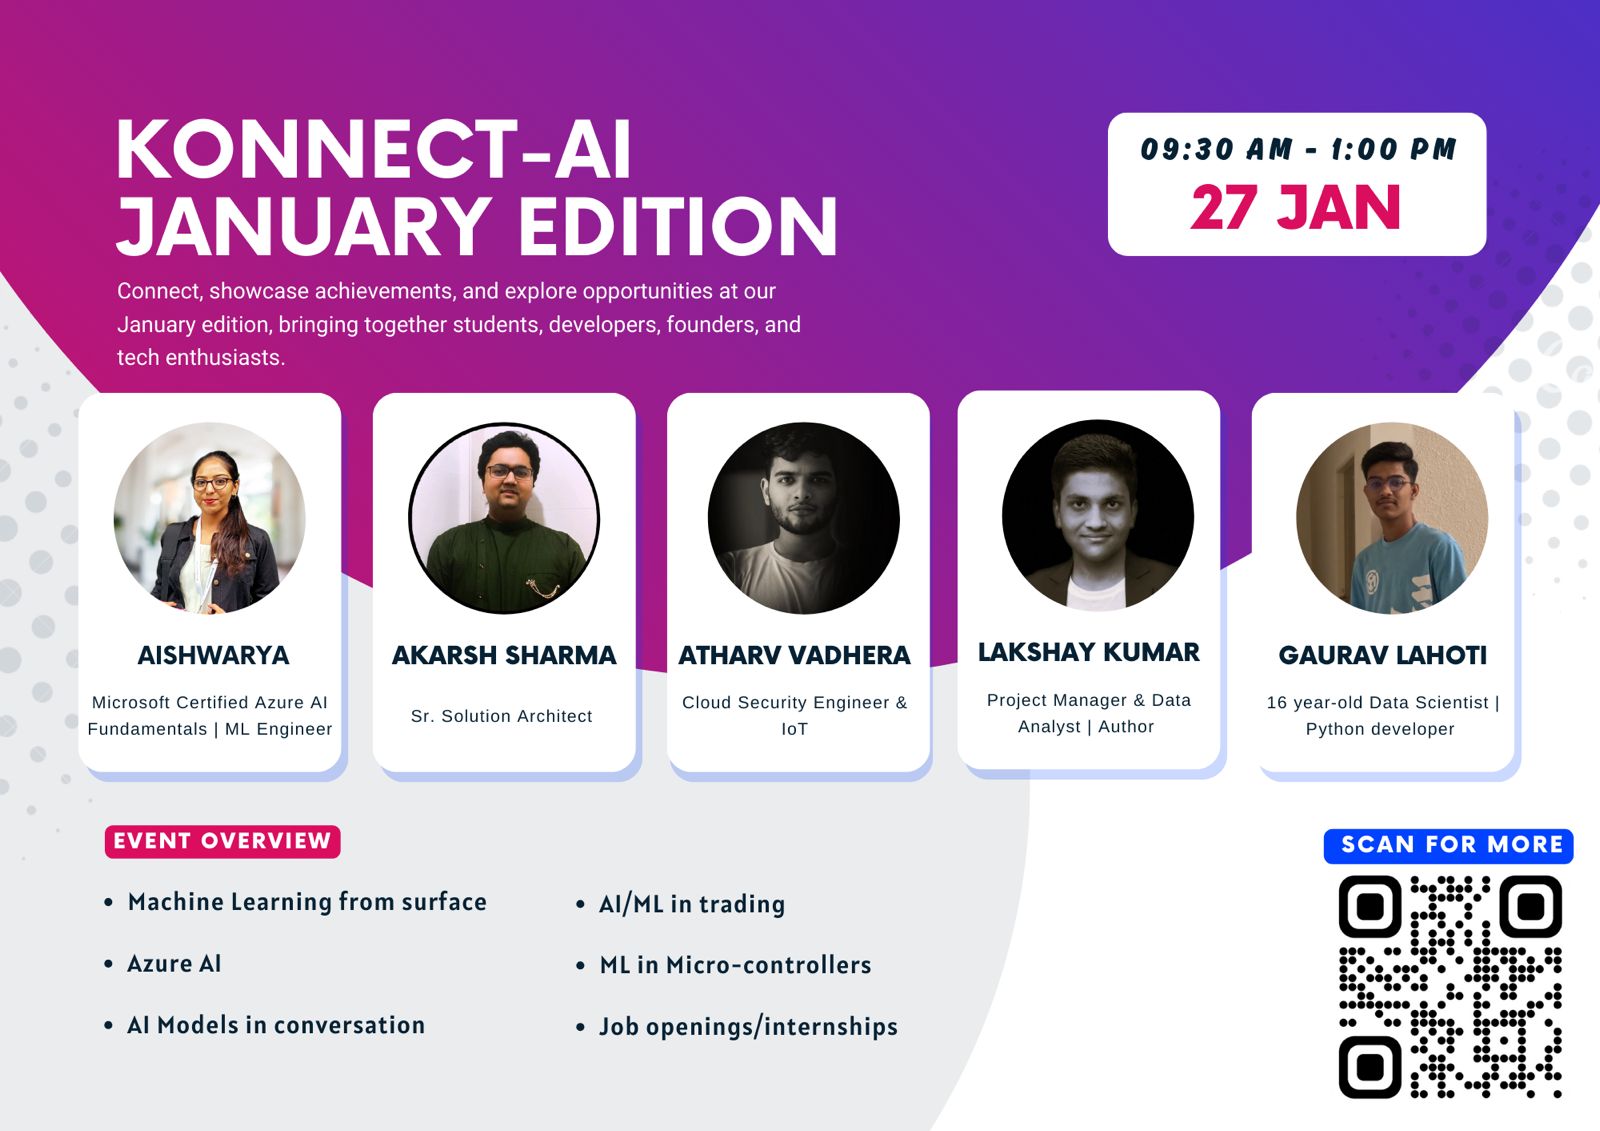 Konnect-AI January Edition meetup hosted by Lakshay Kumar & Gaurav Lahoti